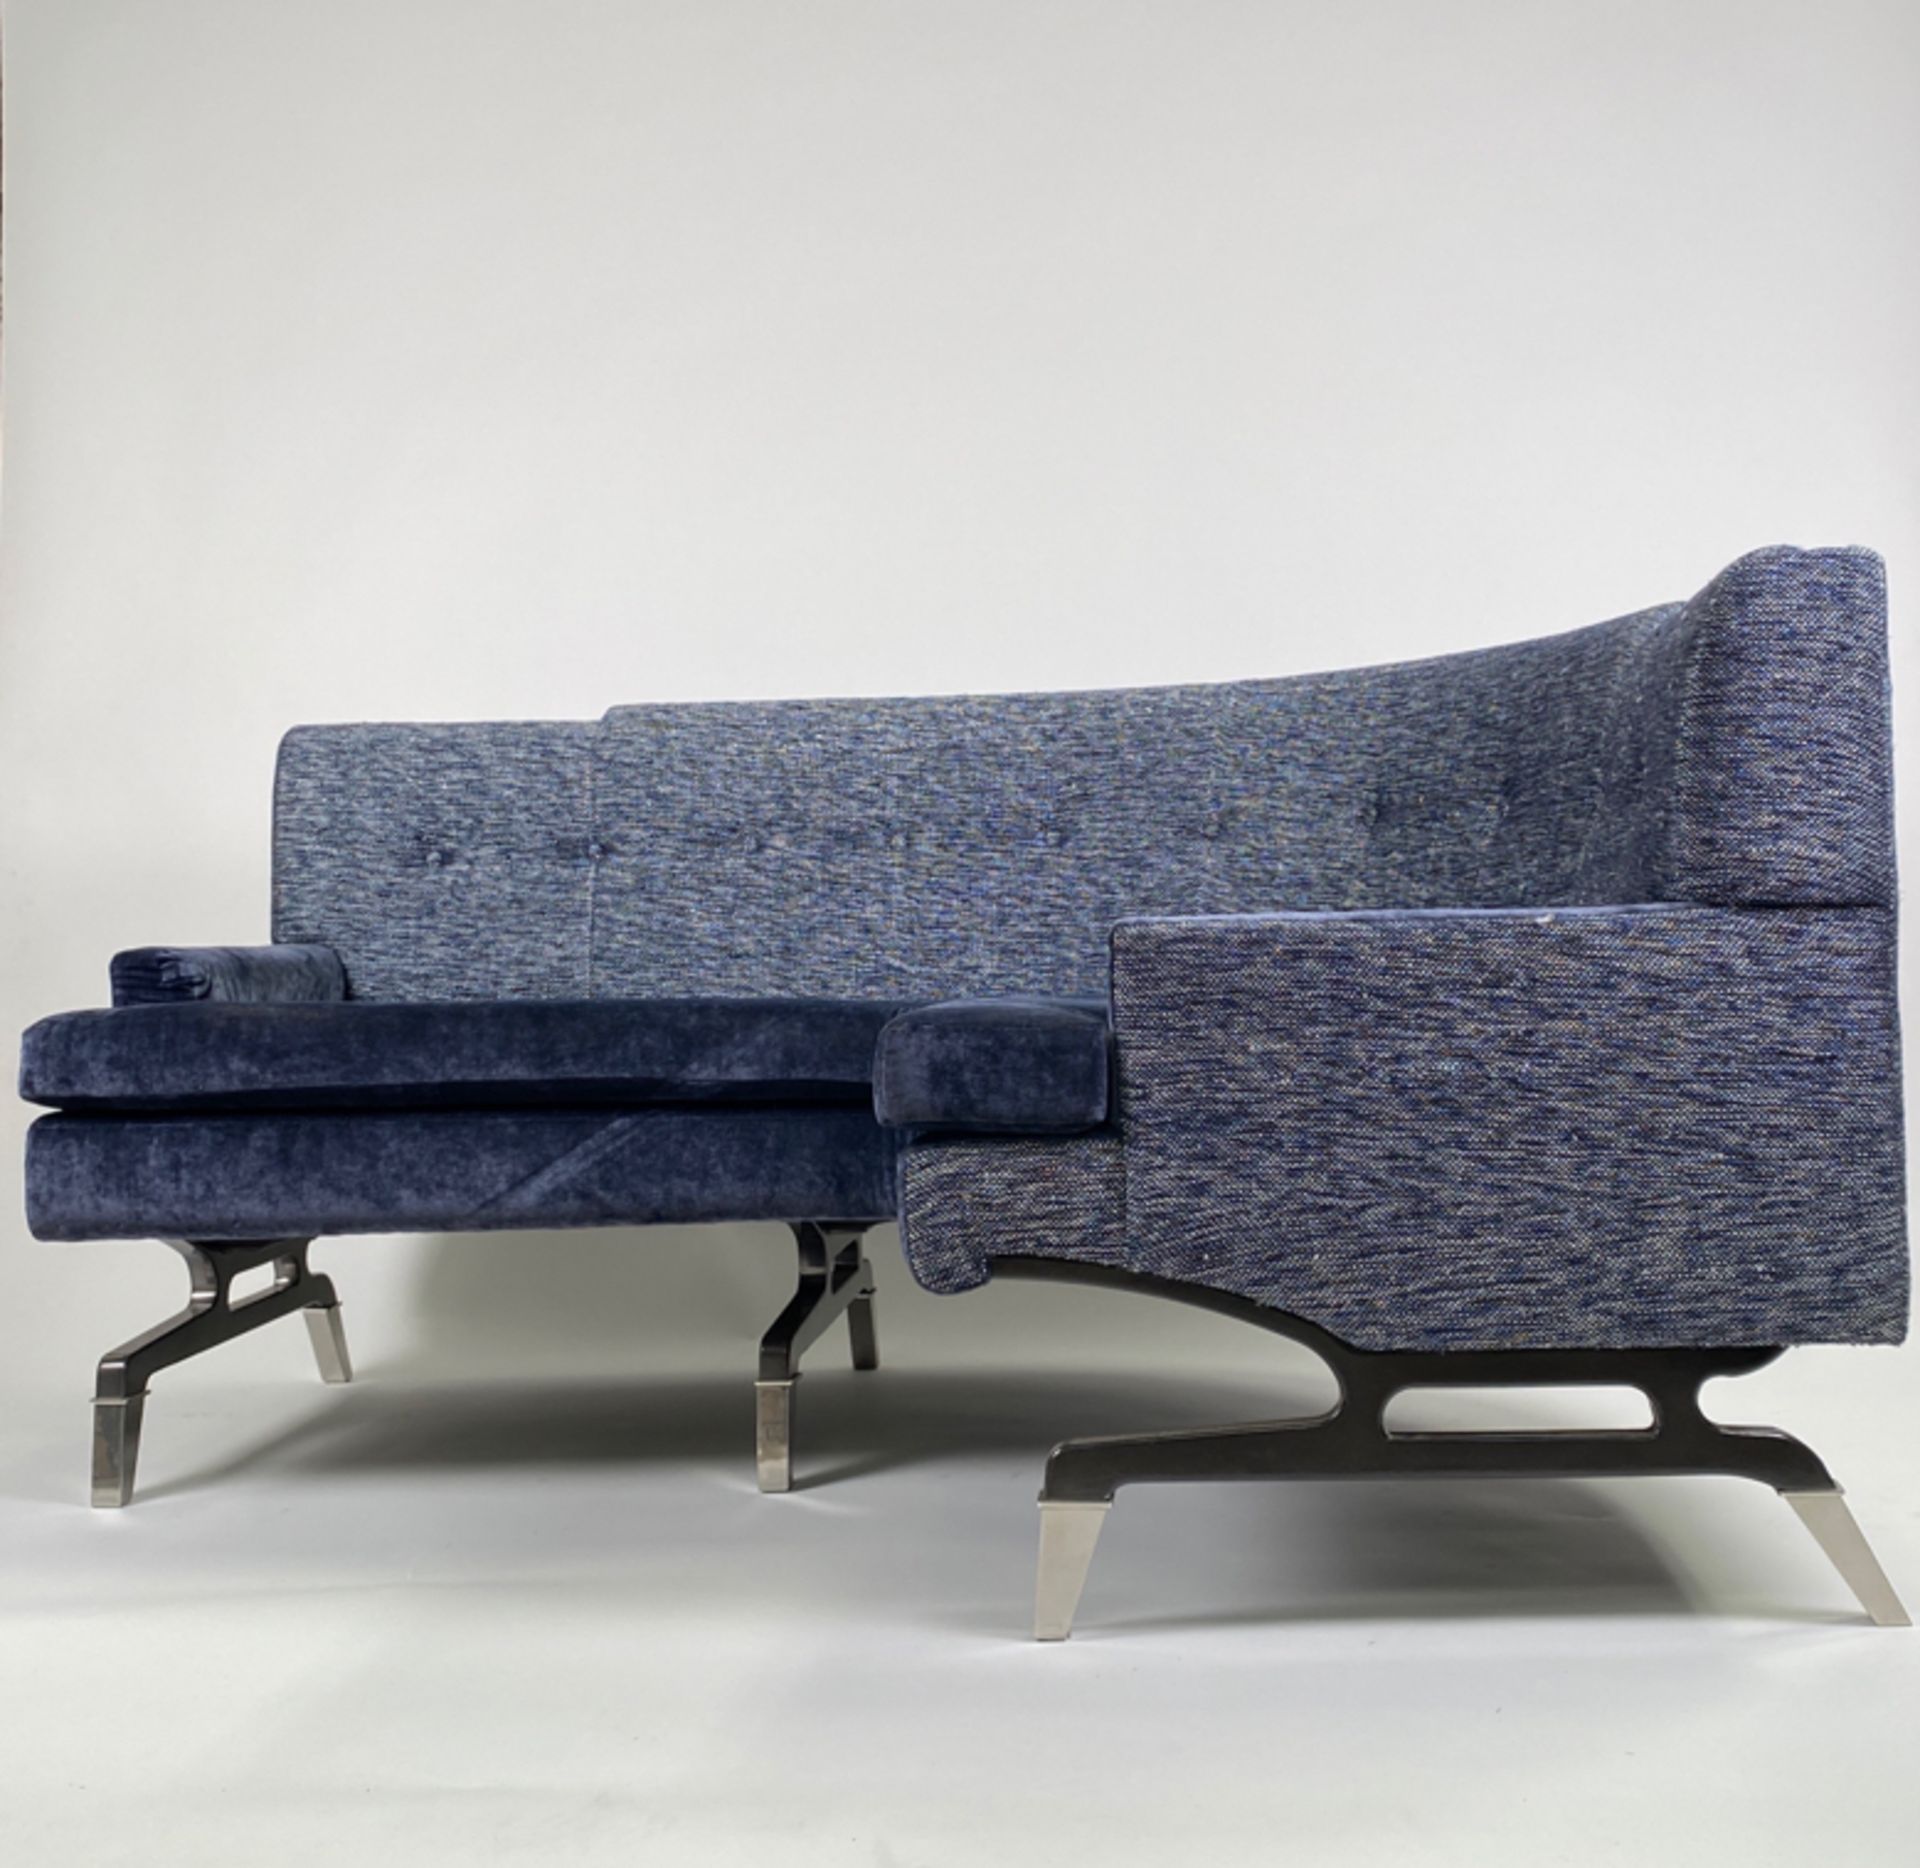 Bespoke Ben Whistler Sofa Made for The Berkeley Blue Bar - Image 4 of 11